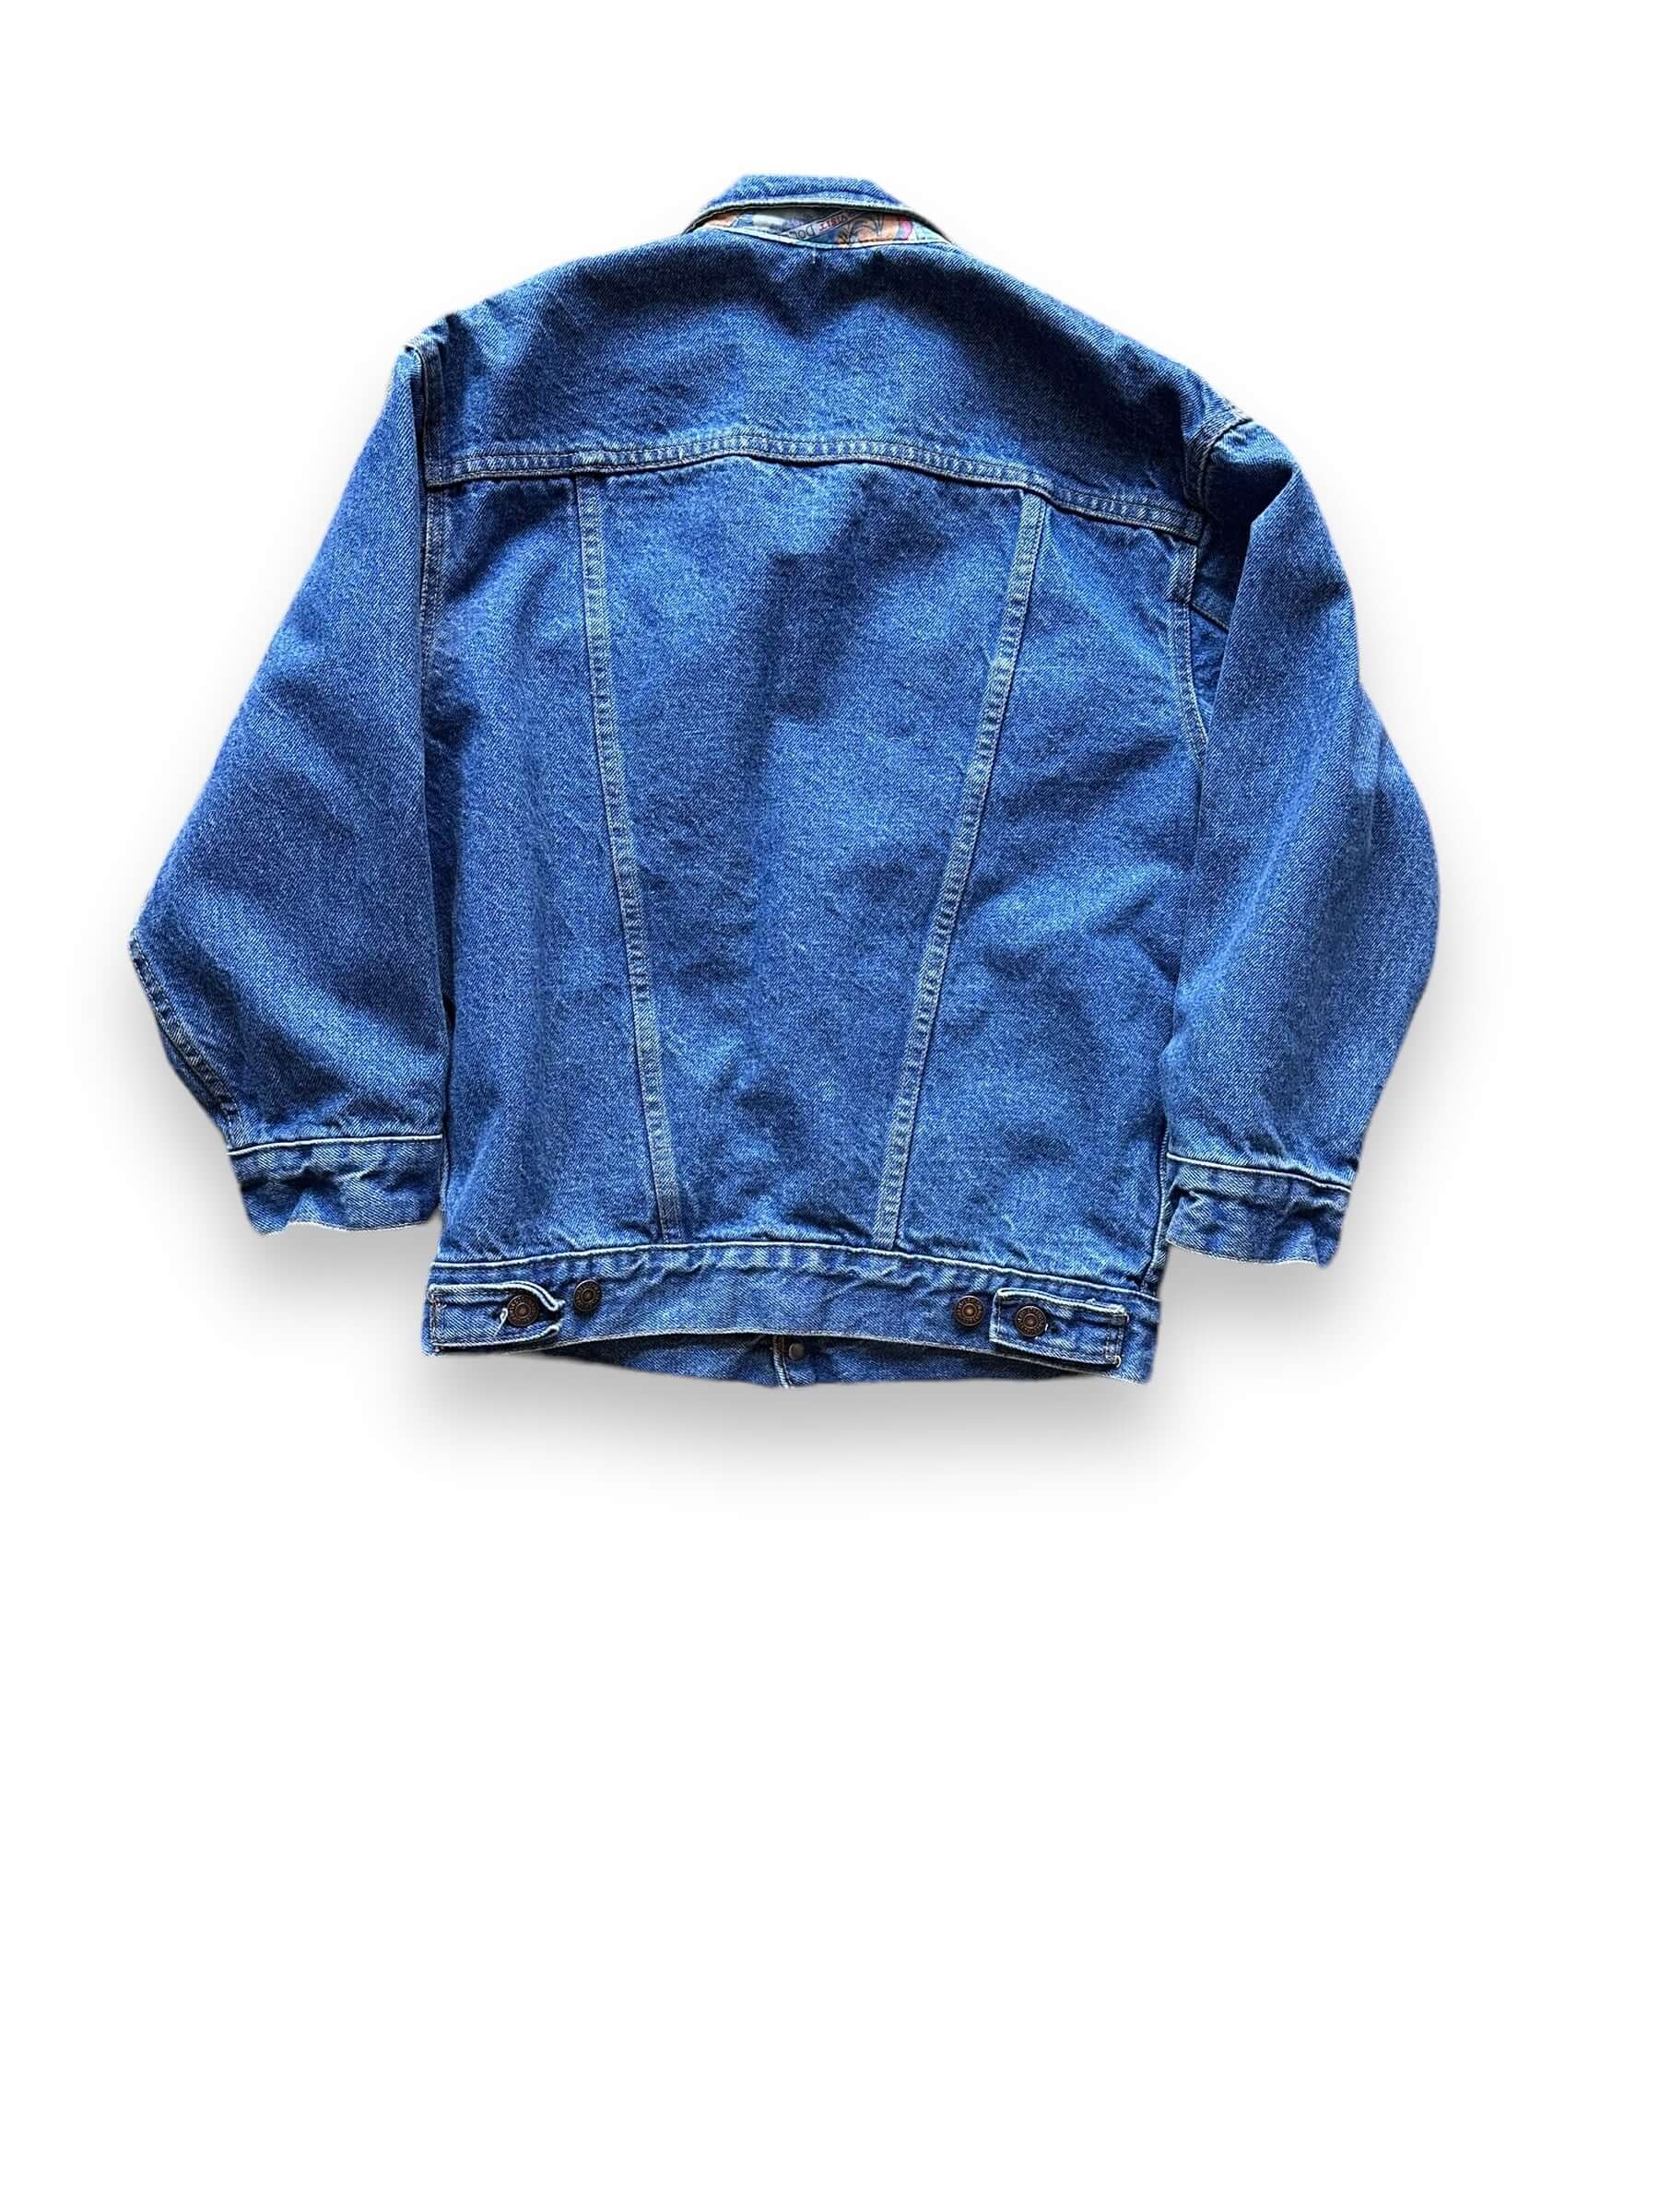 Rear View of Vintage Lined Levis Denim Jacket SZ M | Vintage Denim Seattle